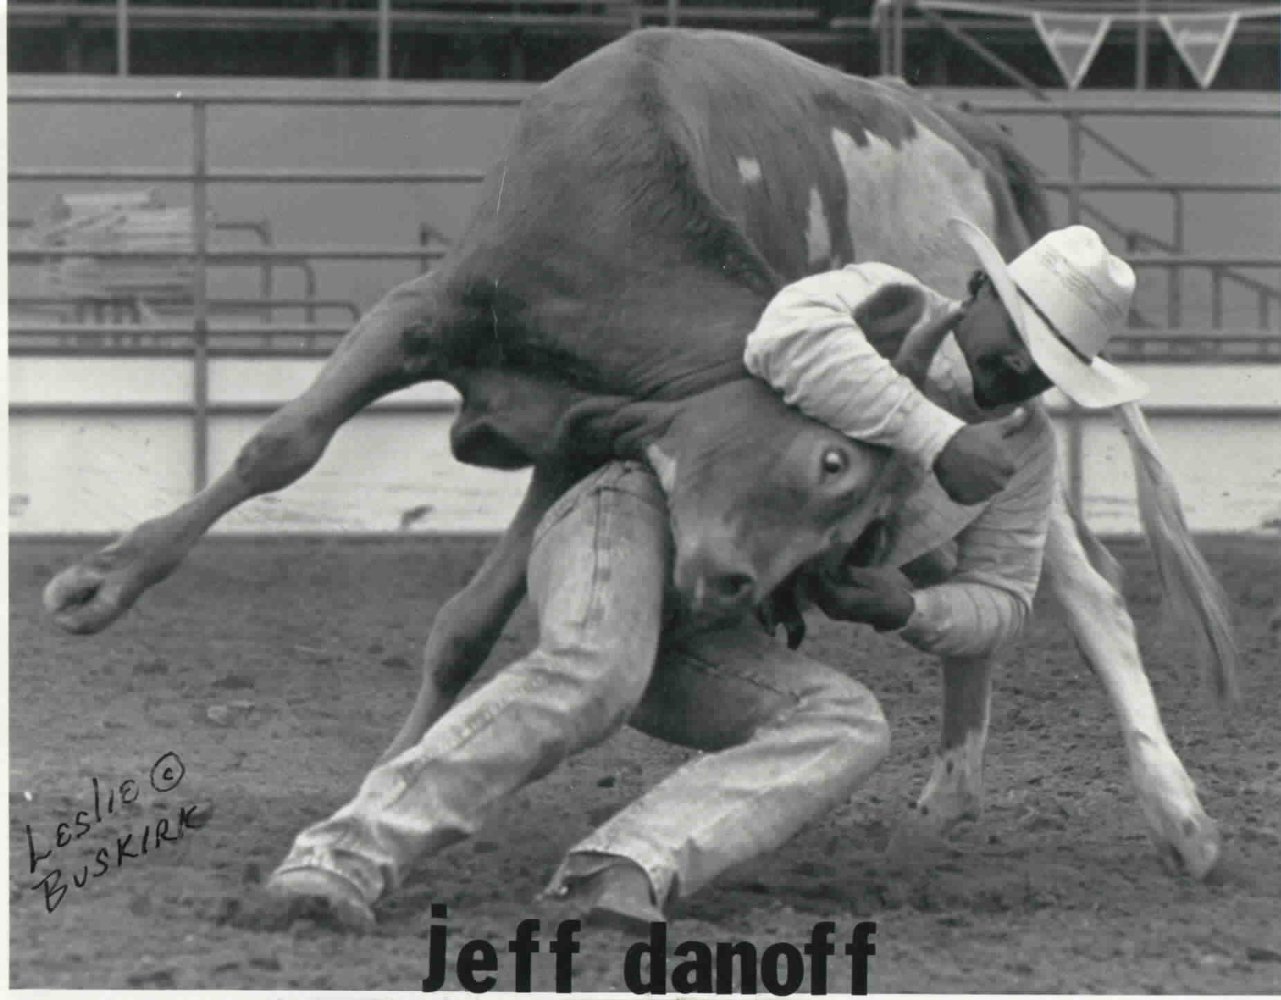 Jeff Danoff